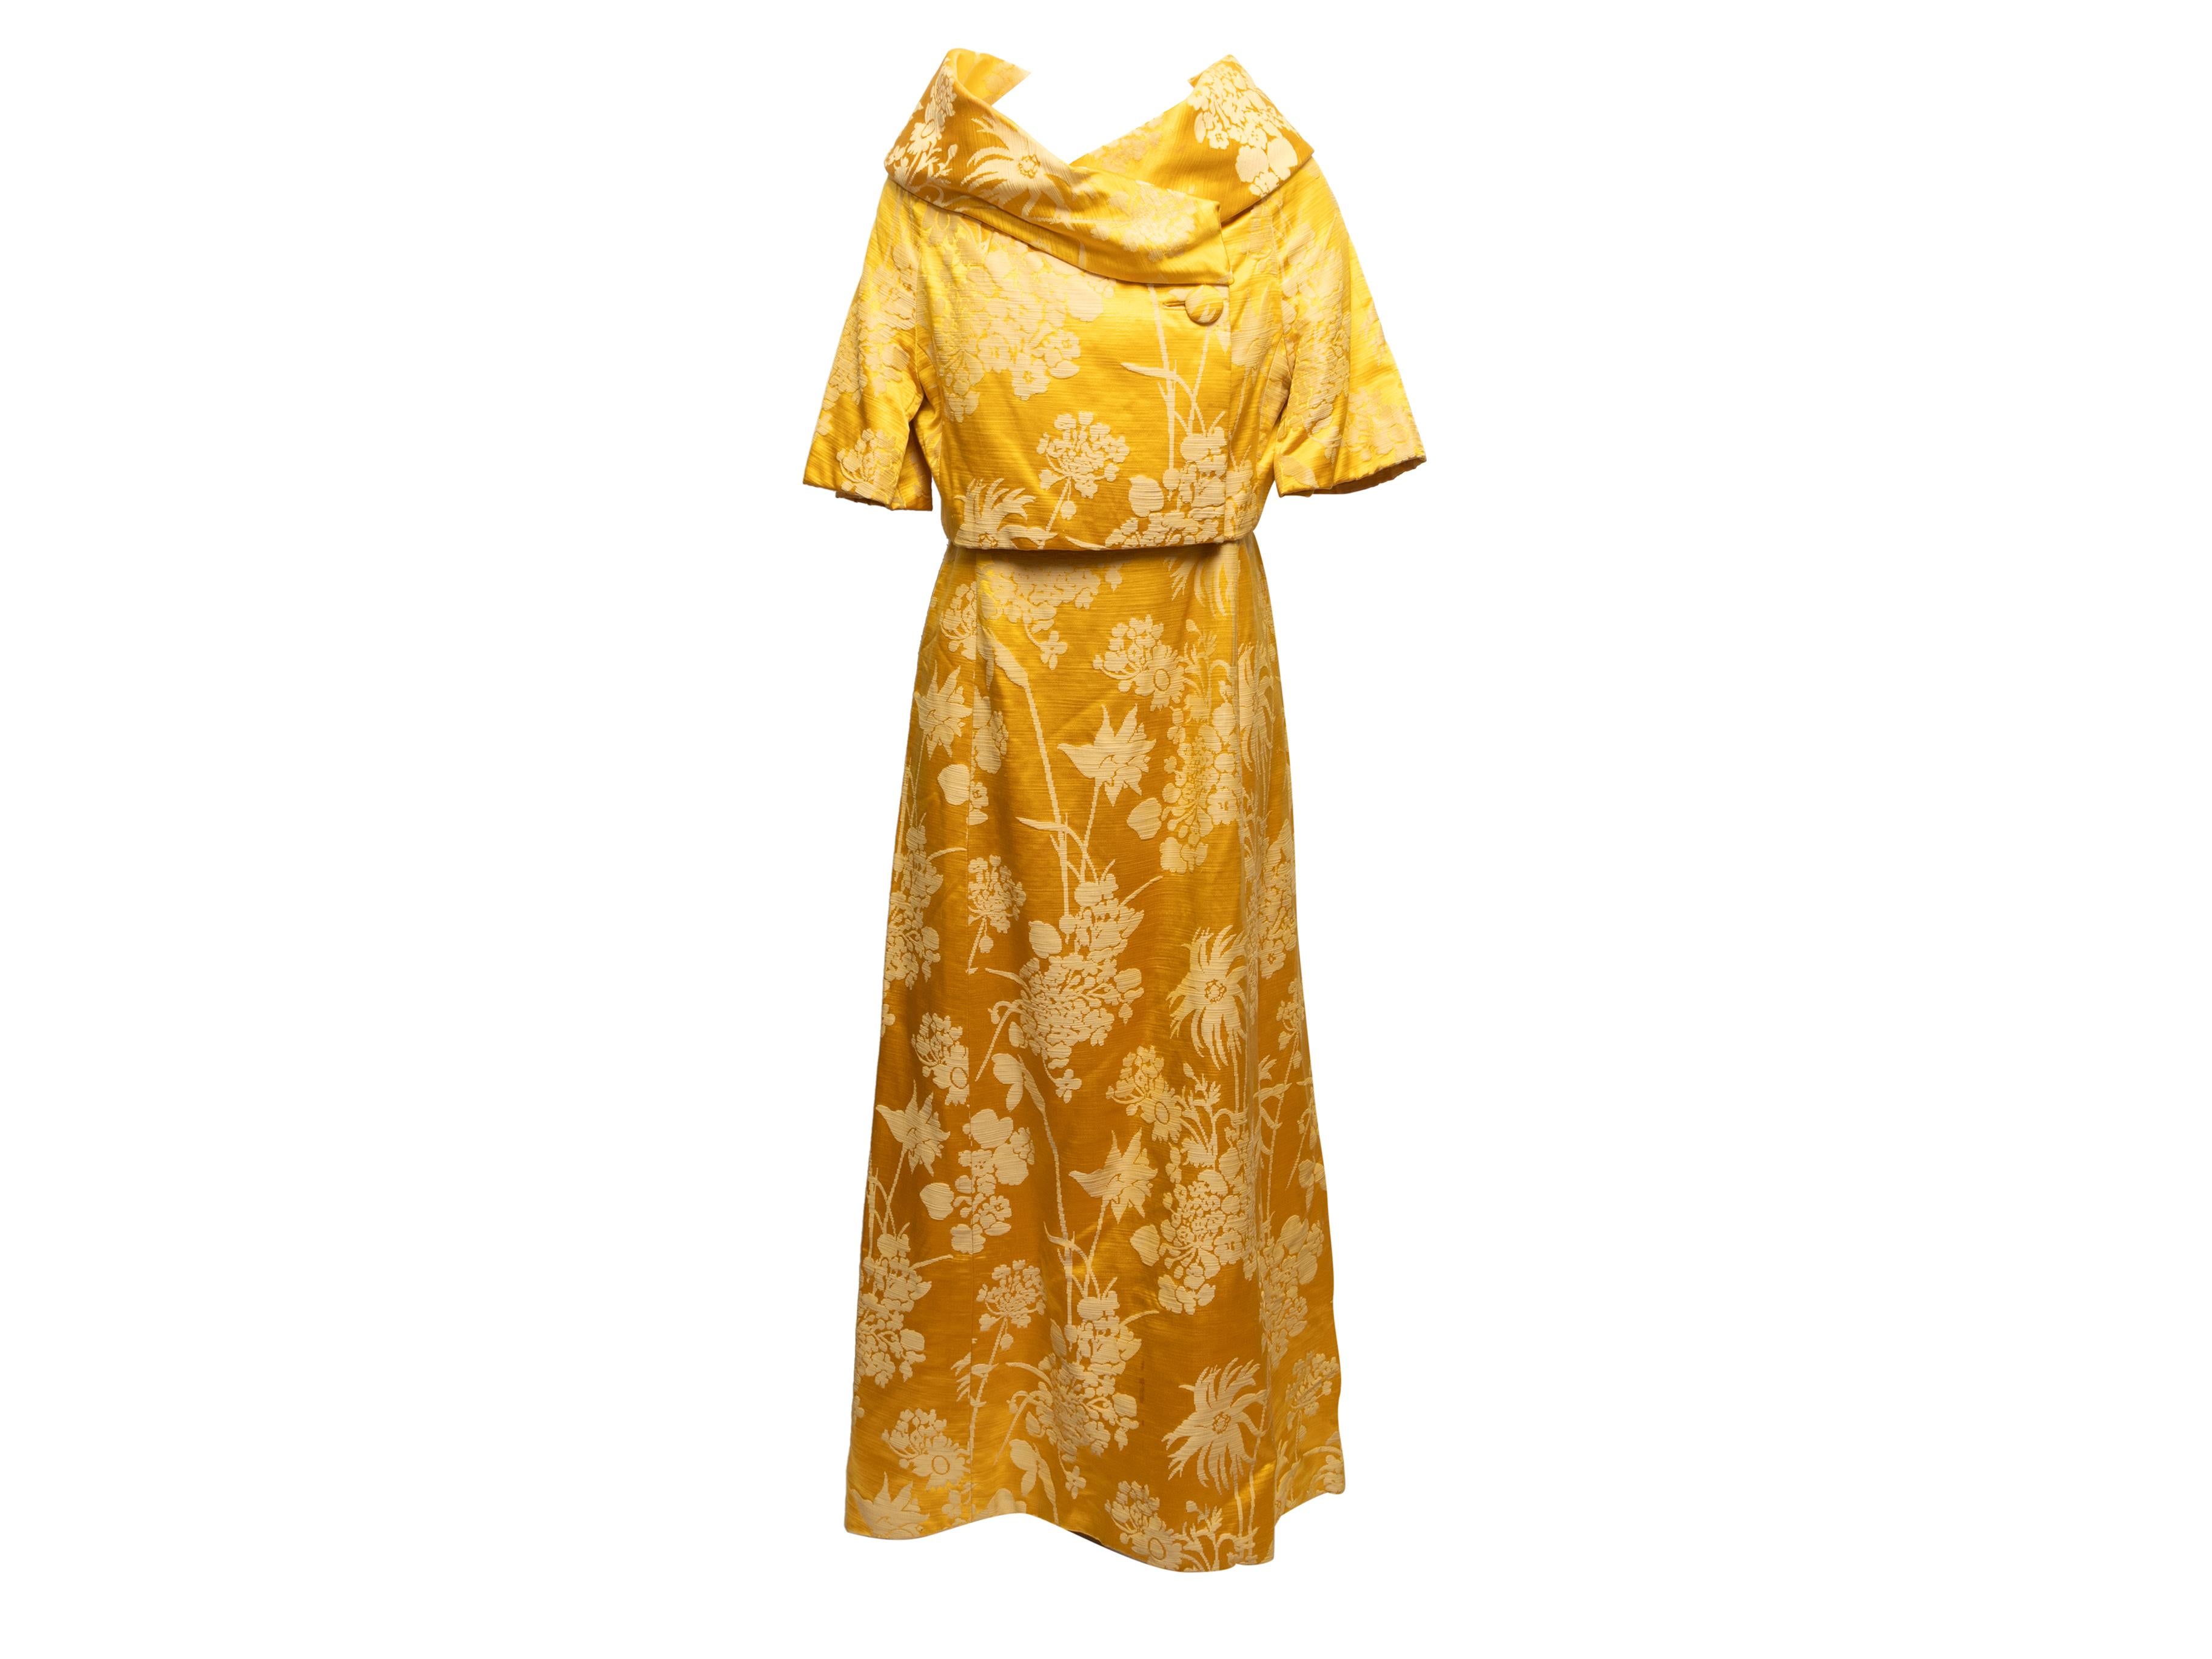 Vintage yellow floral jacquard bolero by Branell. Shawl collar. Short sleeves. Single button closure. 48